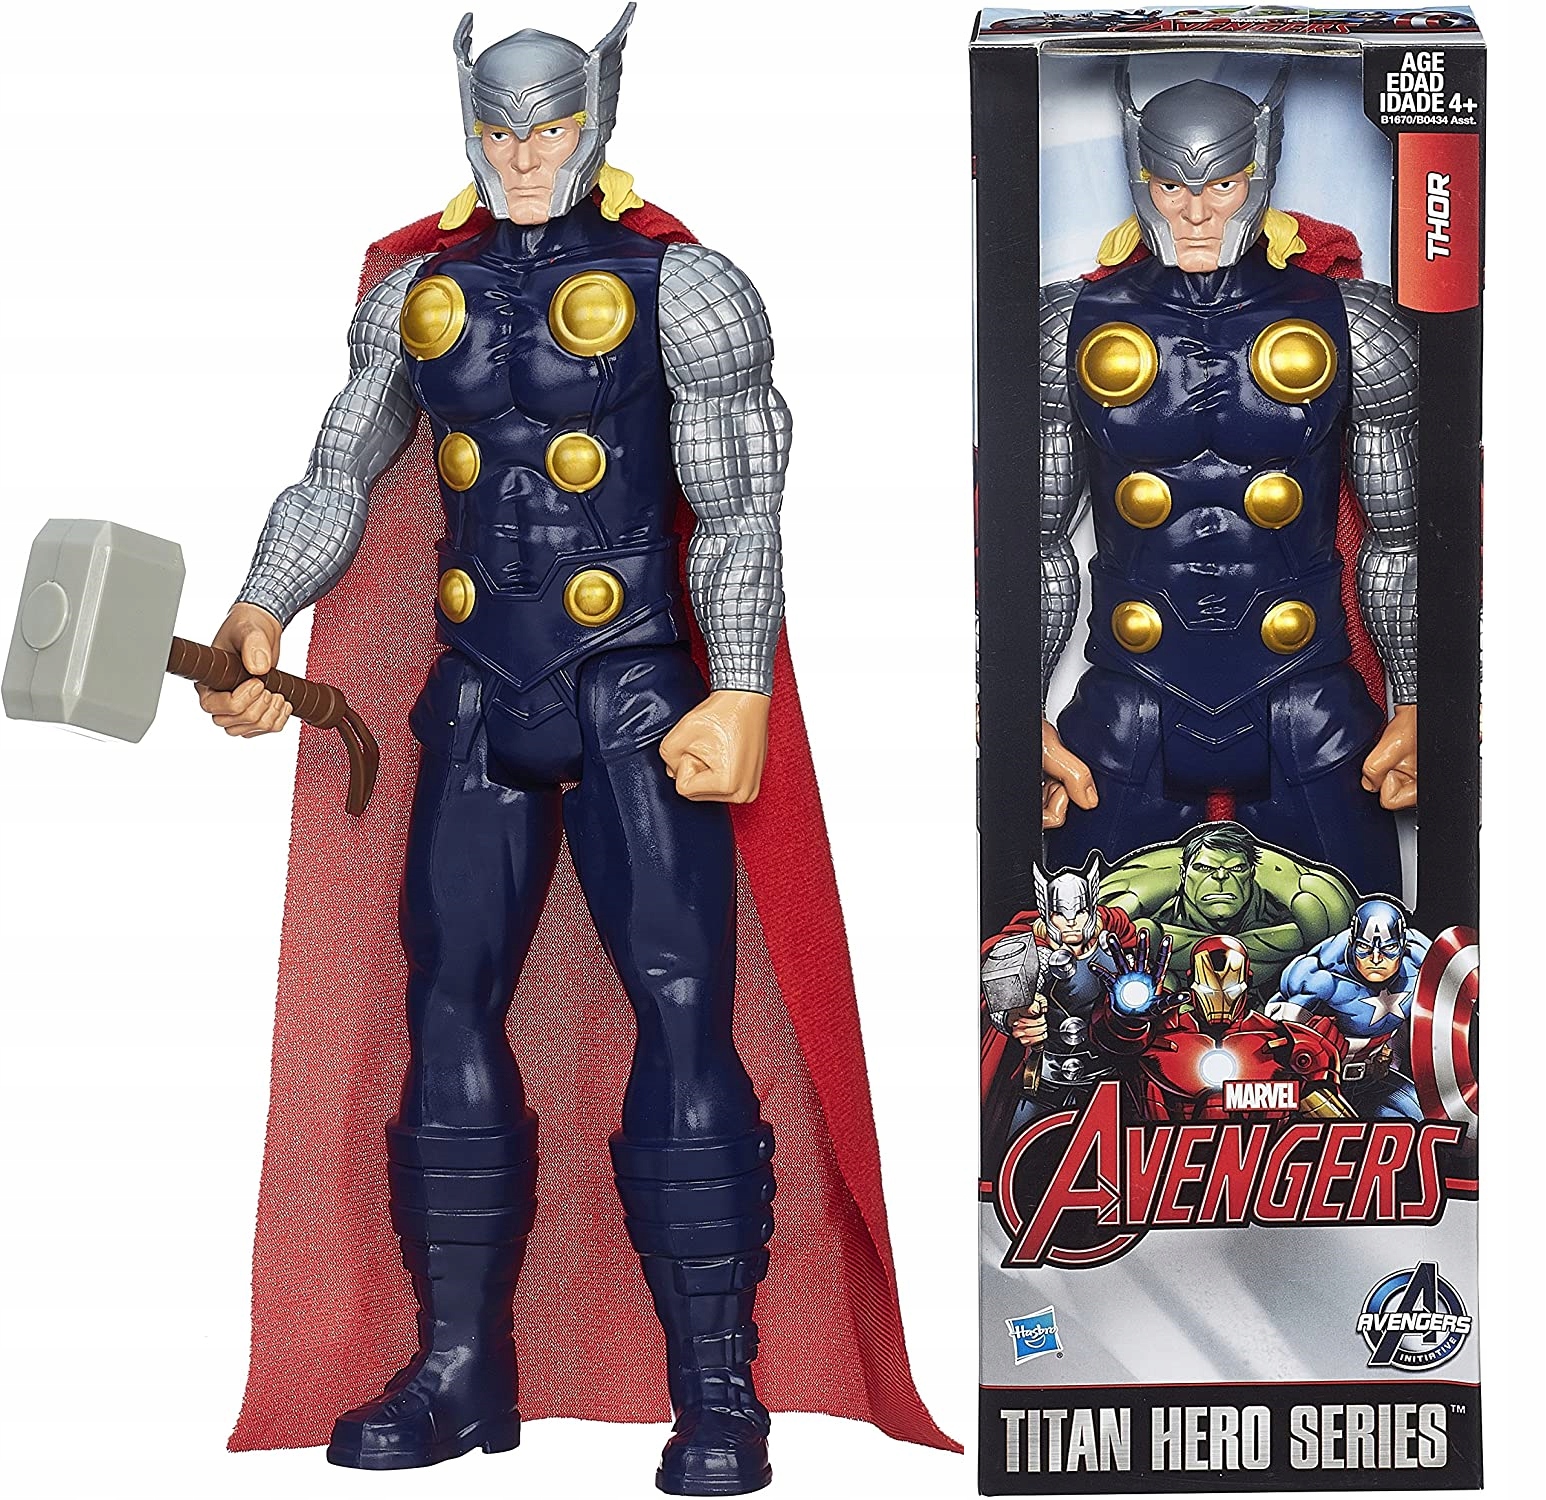 Avengers Thor Figurka 30cm - Figurki dla dzieci - Allegro.pl